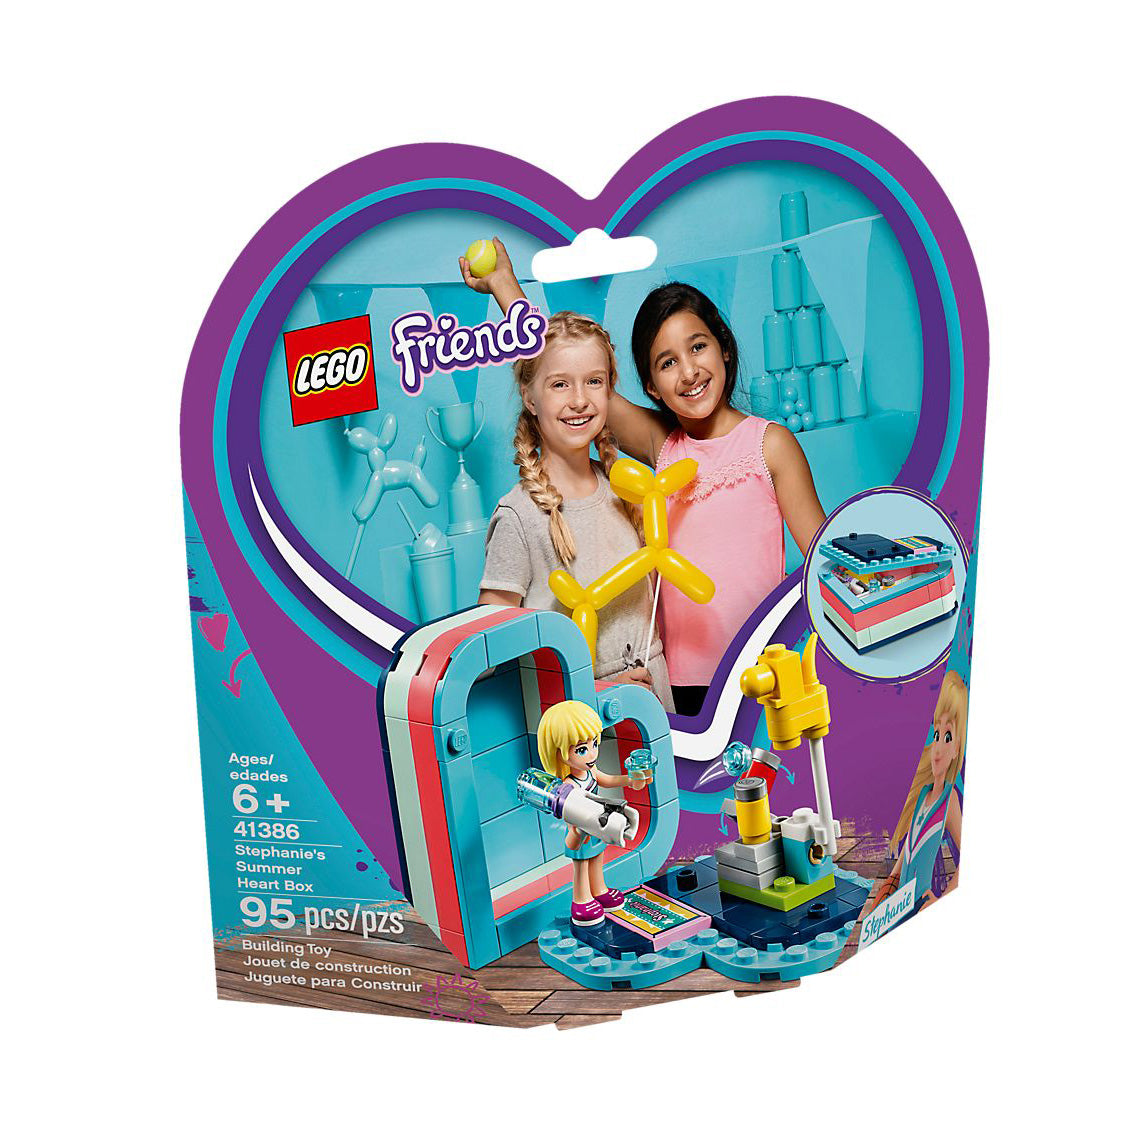 Lego Friends Stephanie's Summer Heart Box 41386